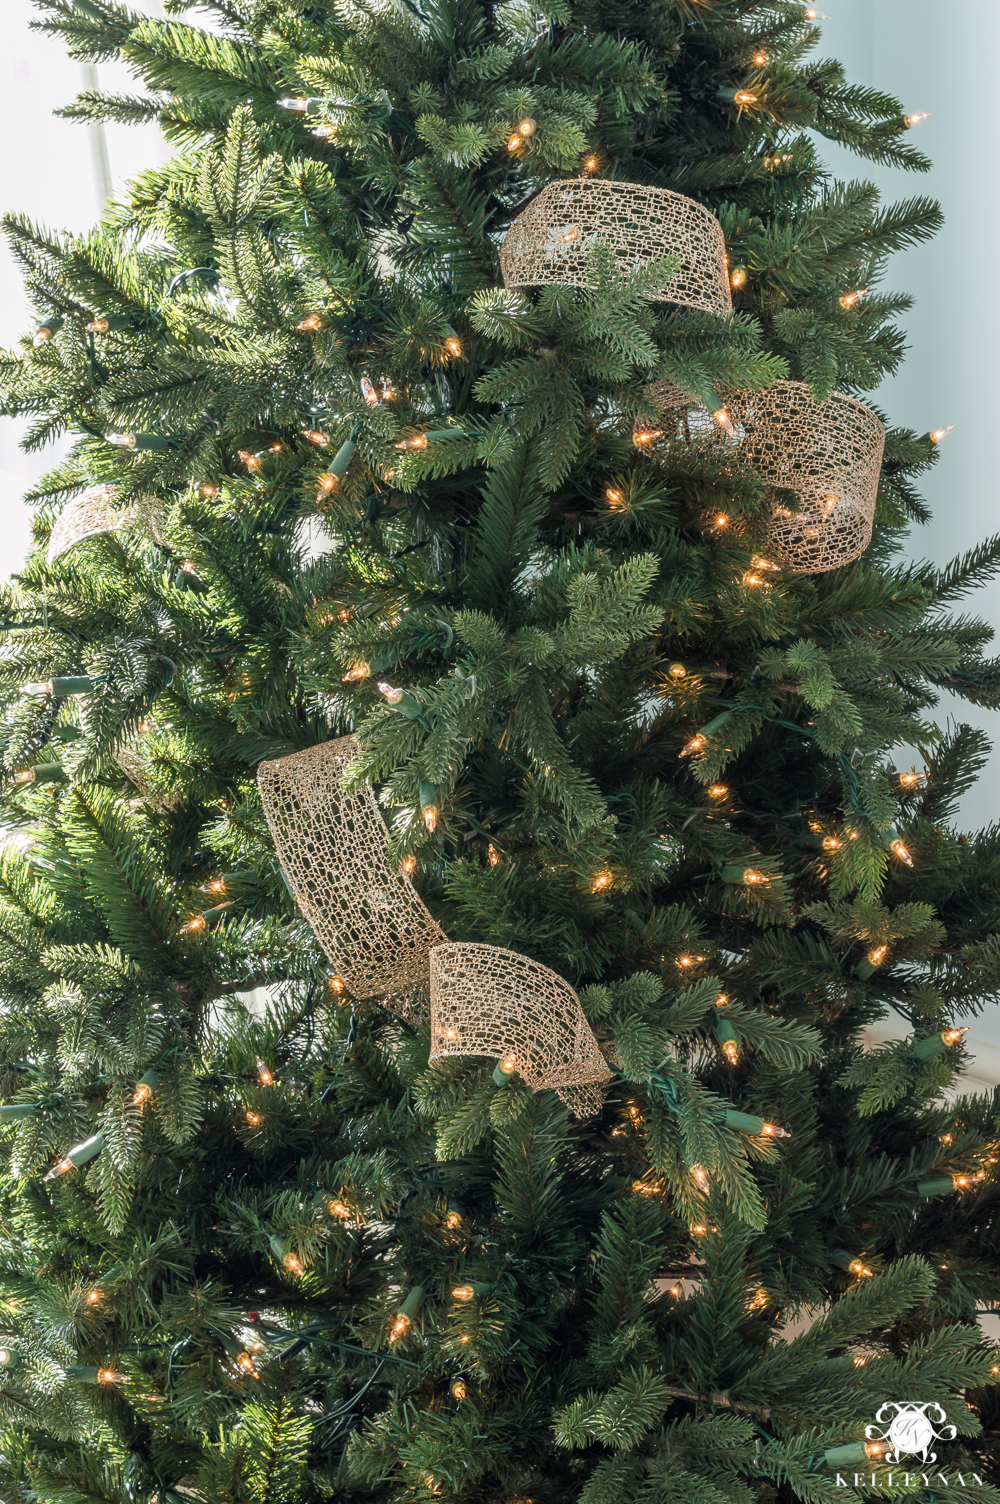 gelei Haarzelf belegd broodje How to Decorate a Christmas Tree with Ribbon - Kelley Nan